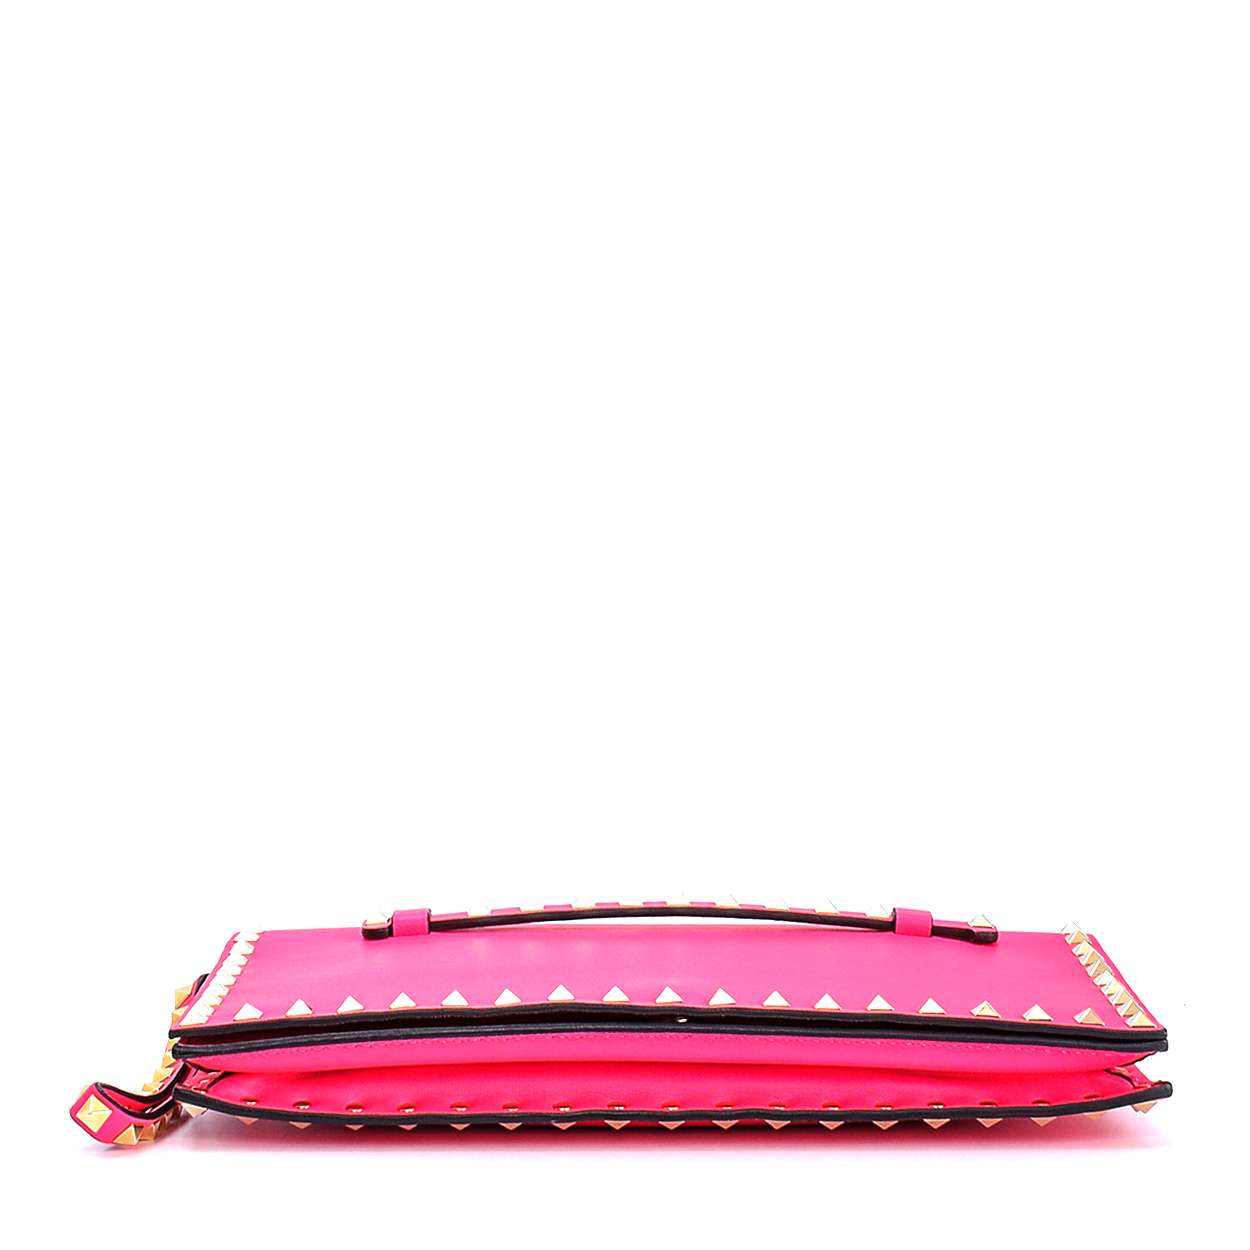 Valentino - Pink Leather Rockstud Wristlet Clutch